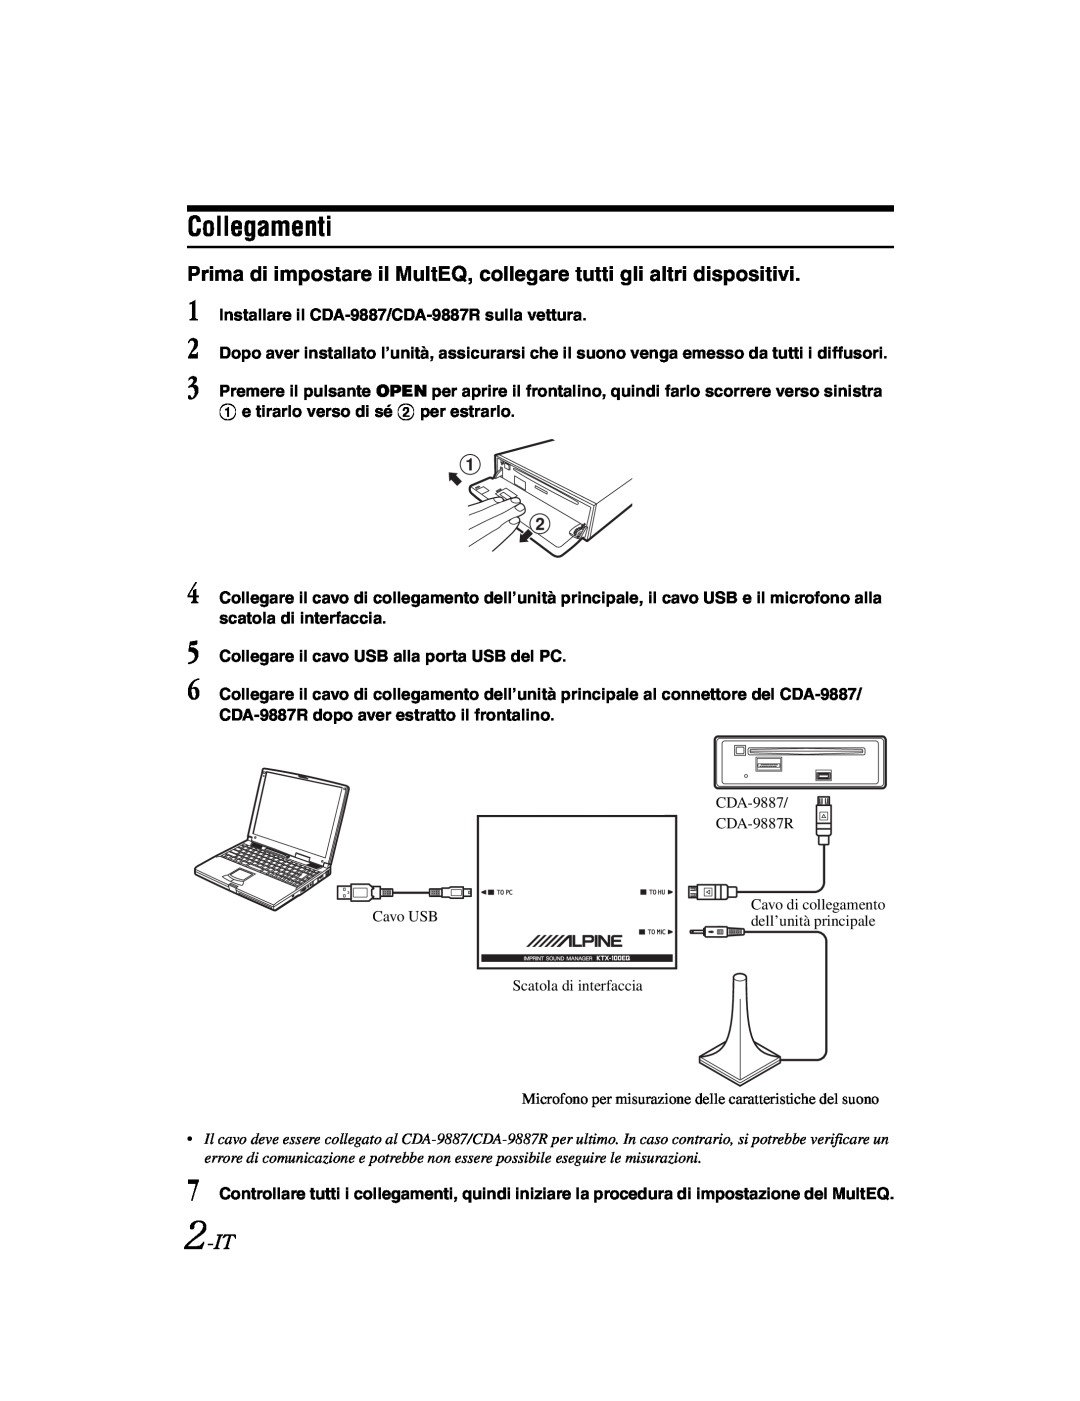 Alpine KTX-100EQ owner manual Collegamenti, 2-IT, 1 2 